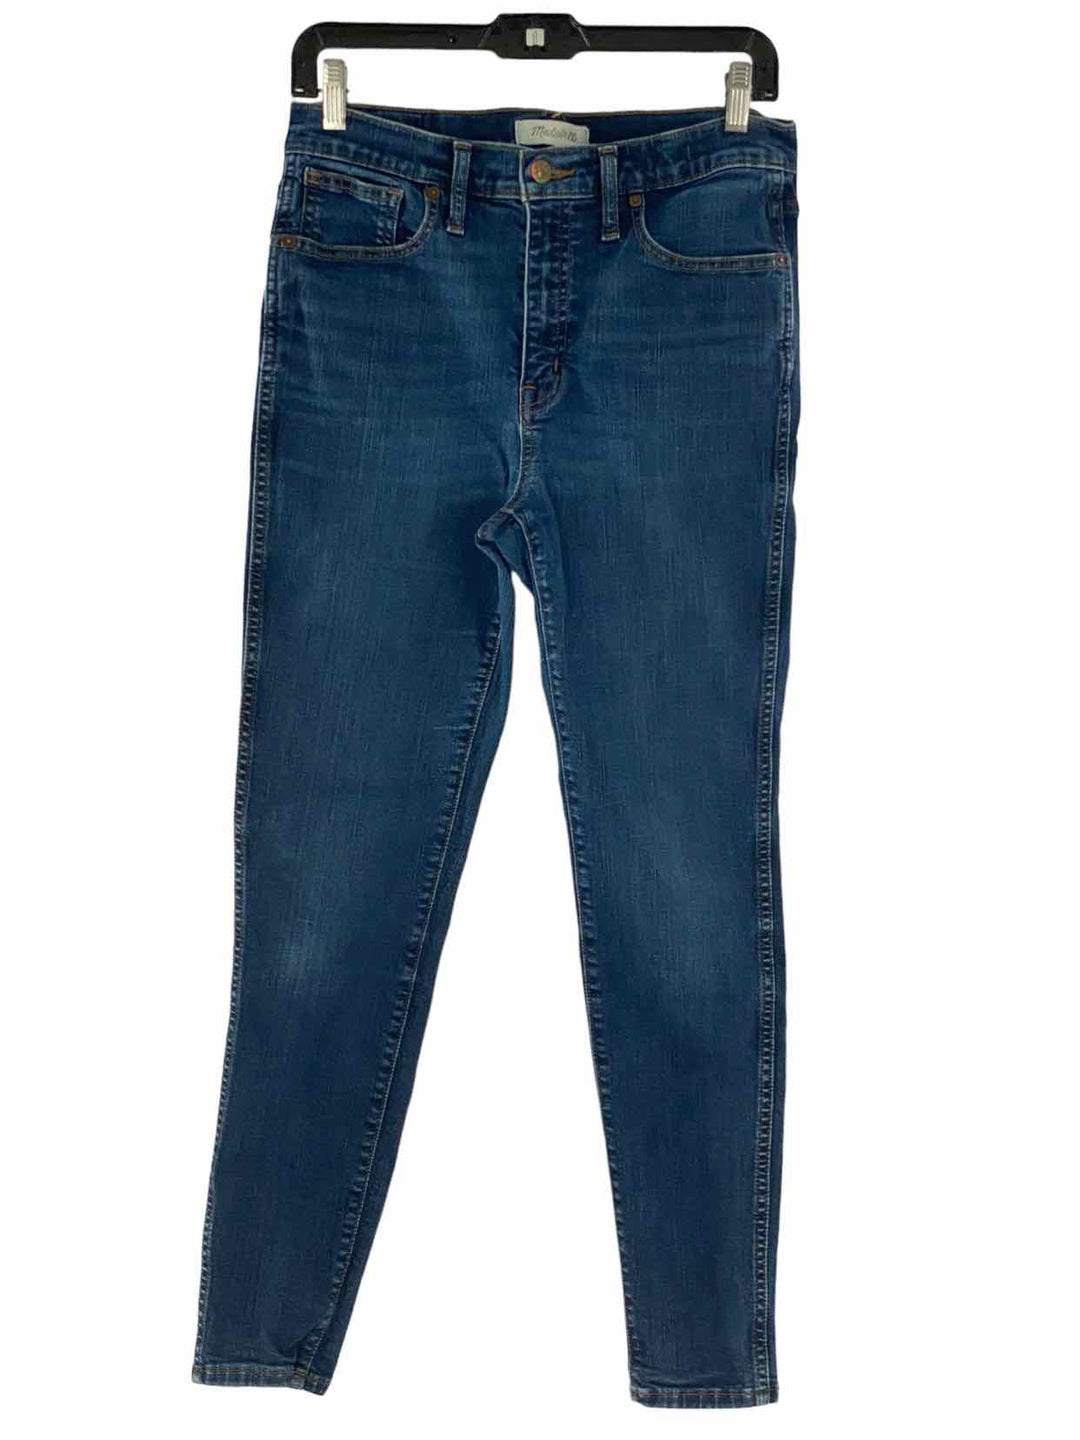 MadeWell Size 6 Medium wash Jeans